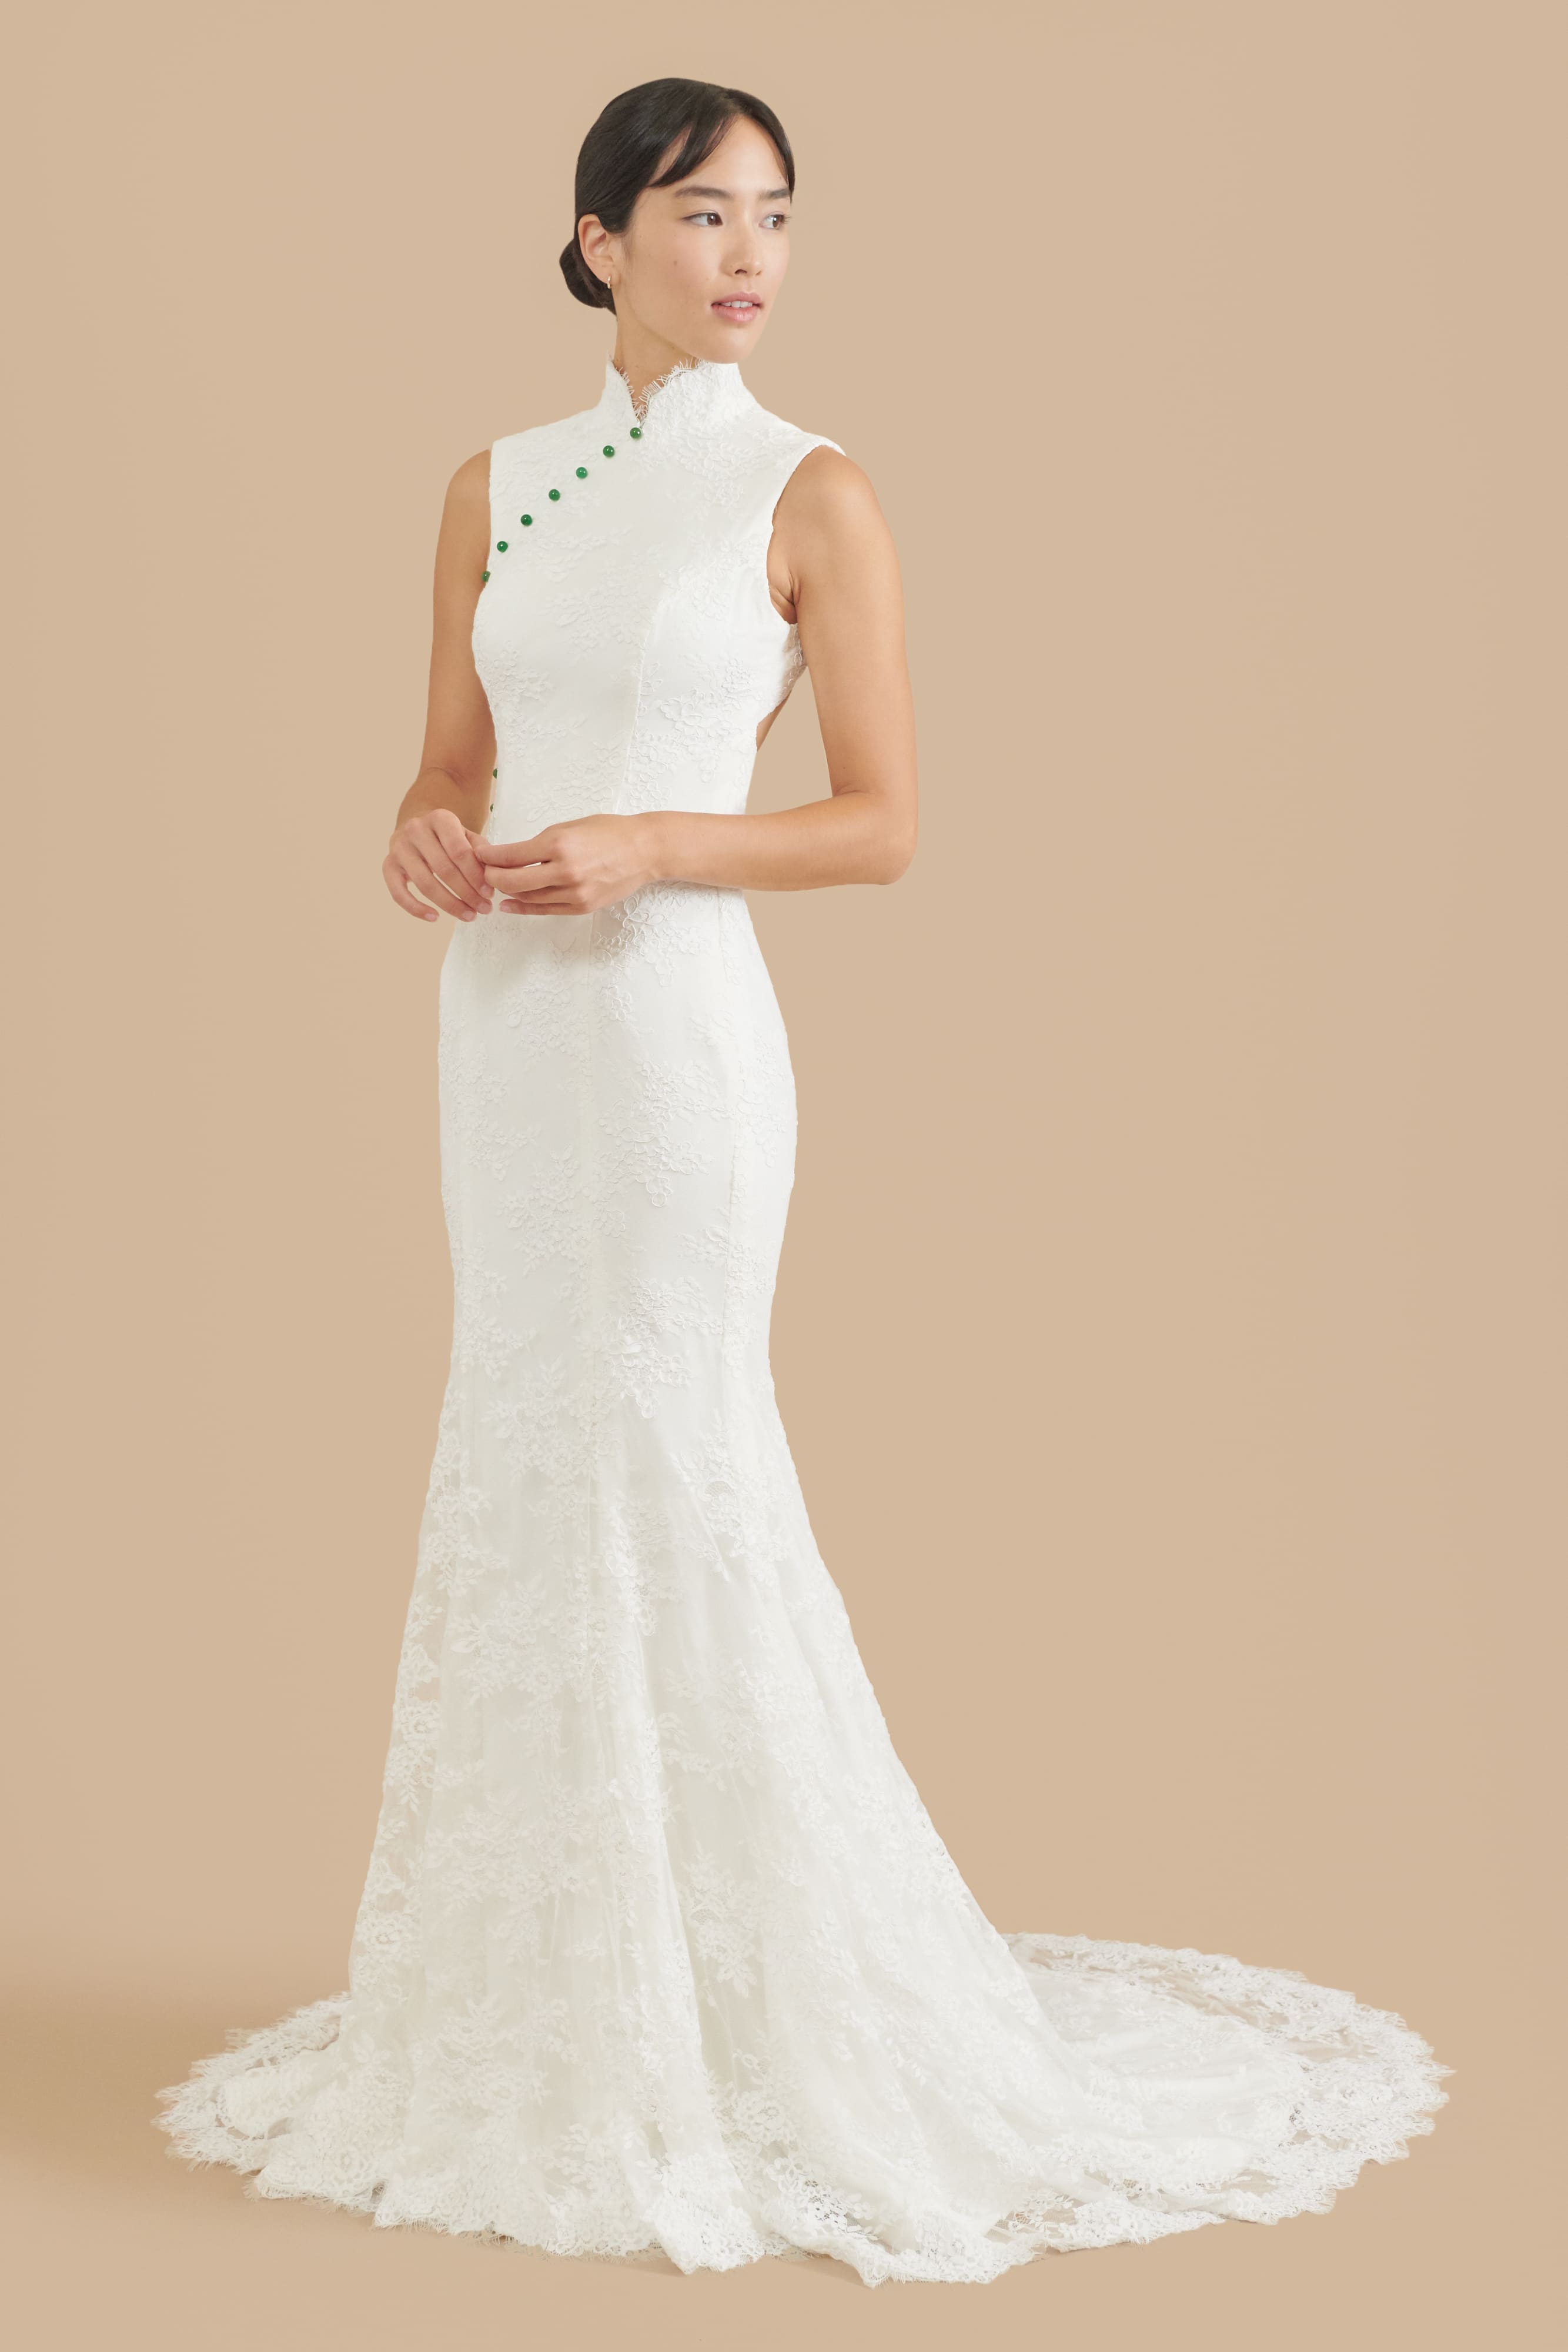 Asian Bridal Dress 2022 in Seafoam Aqua Green UK, USA, Canada